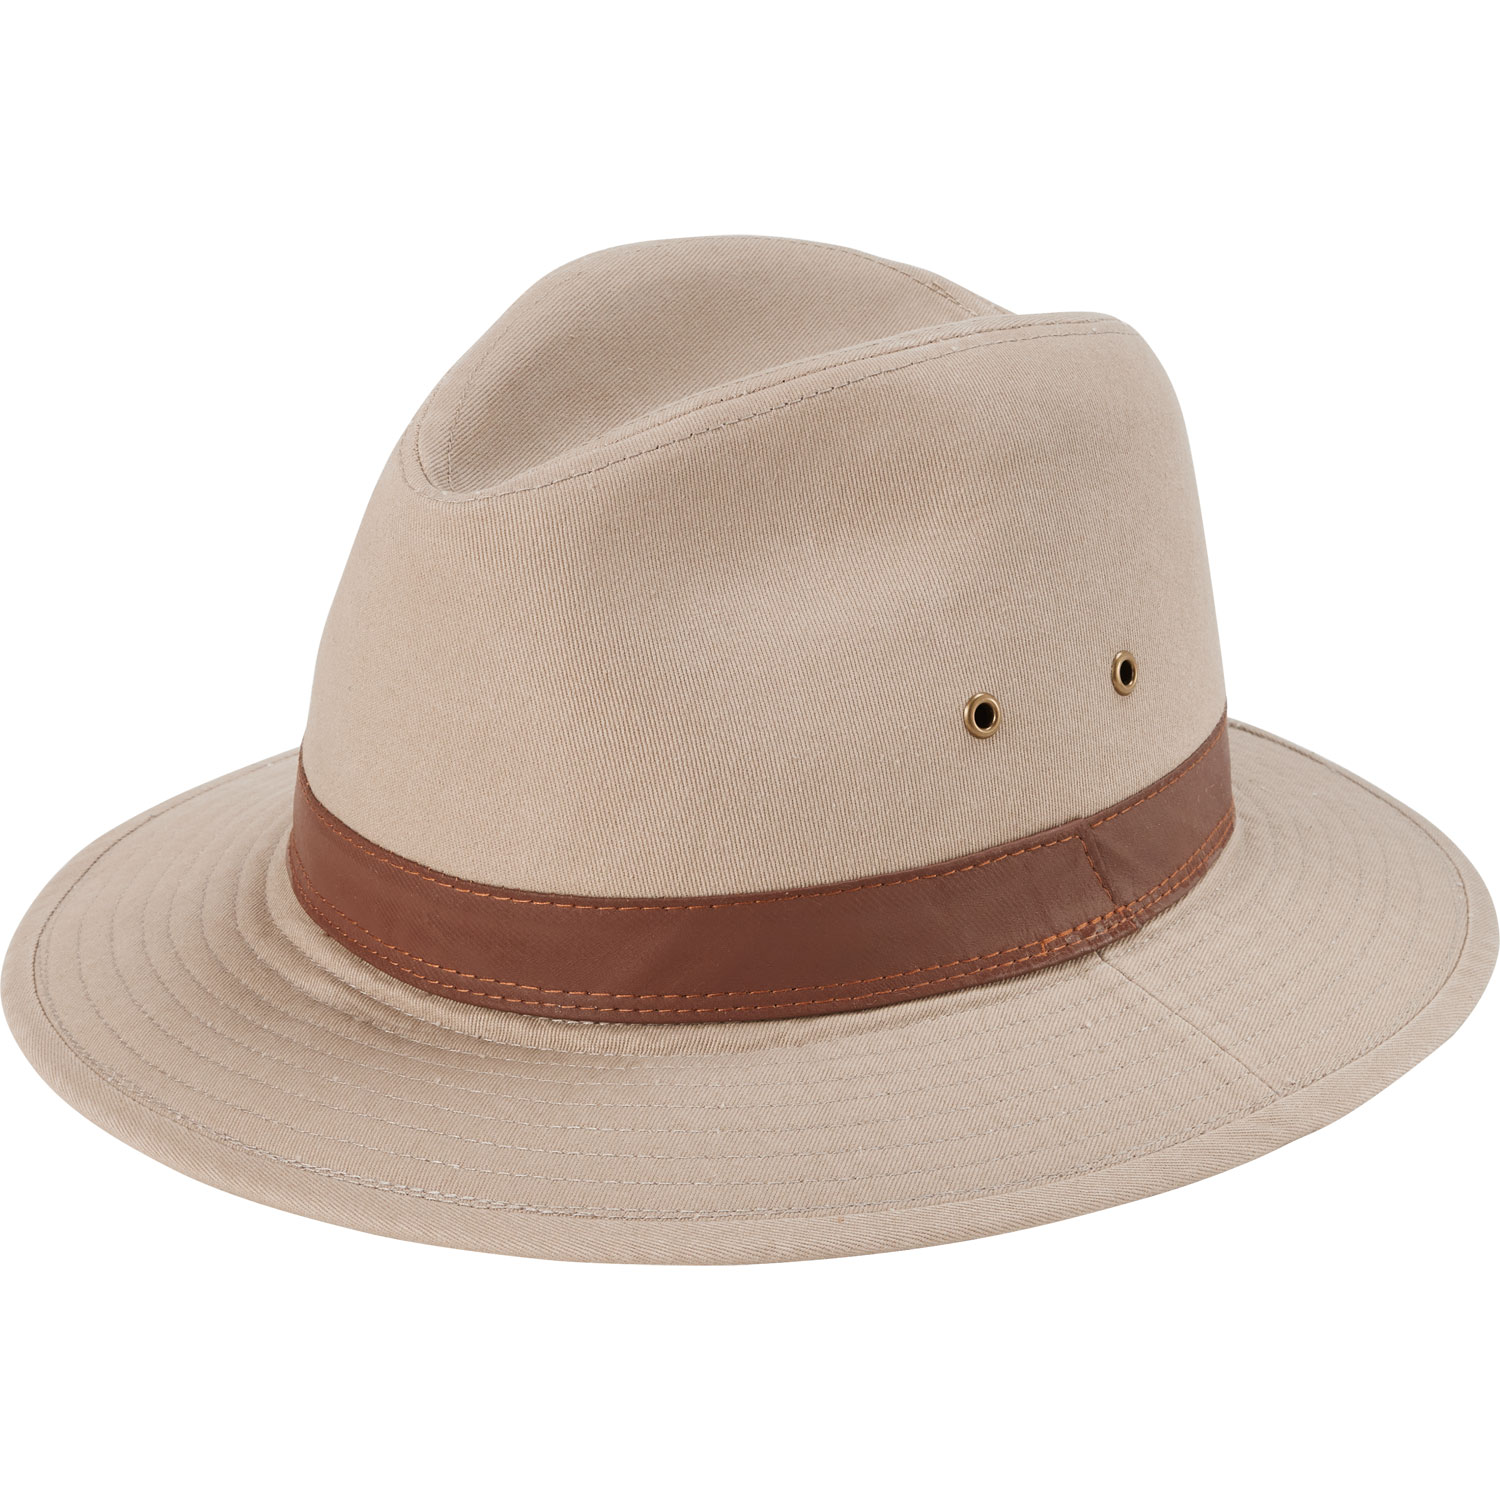 Men's FDR Summer Hat - Tan/Khaki M/L - Duluth Trading Company